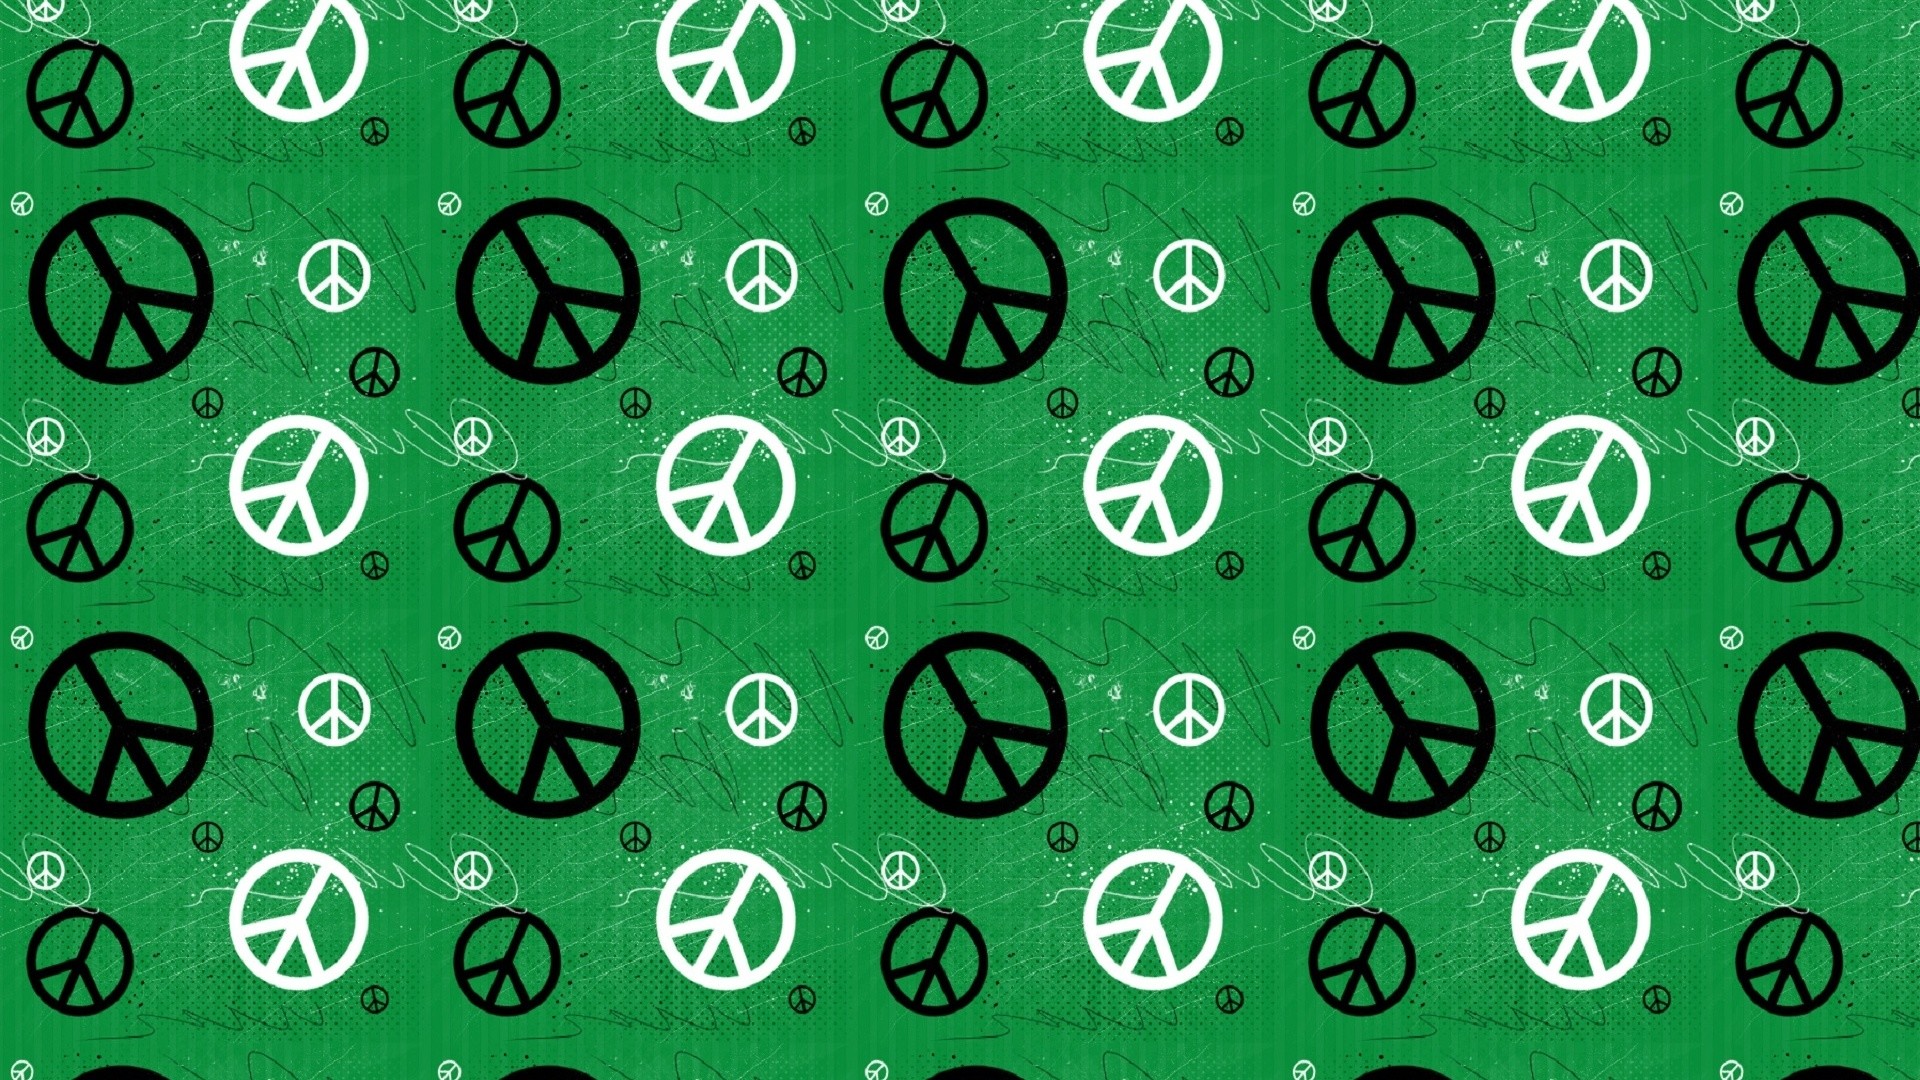 Peace Sign Desktop Wallpaper (58+ images)